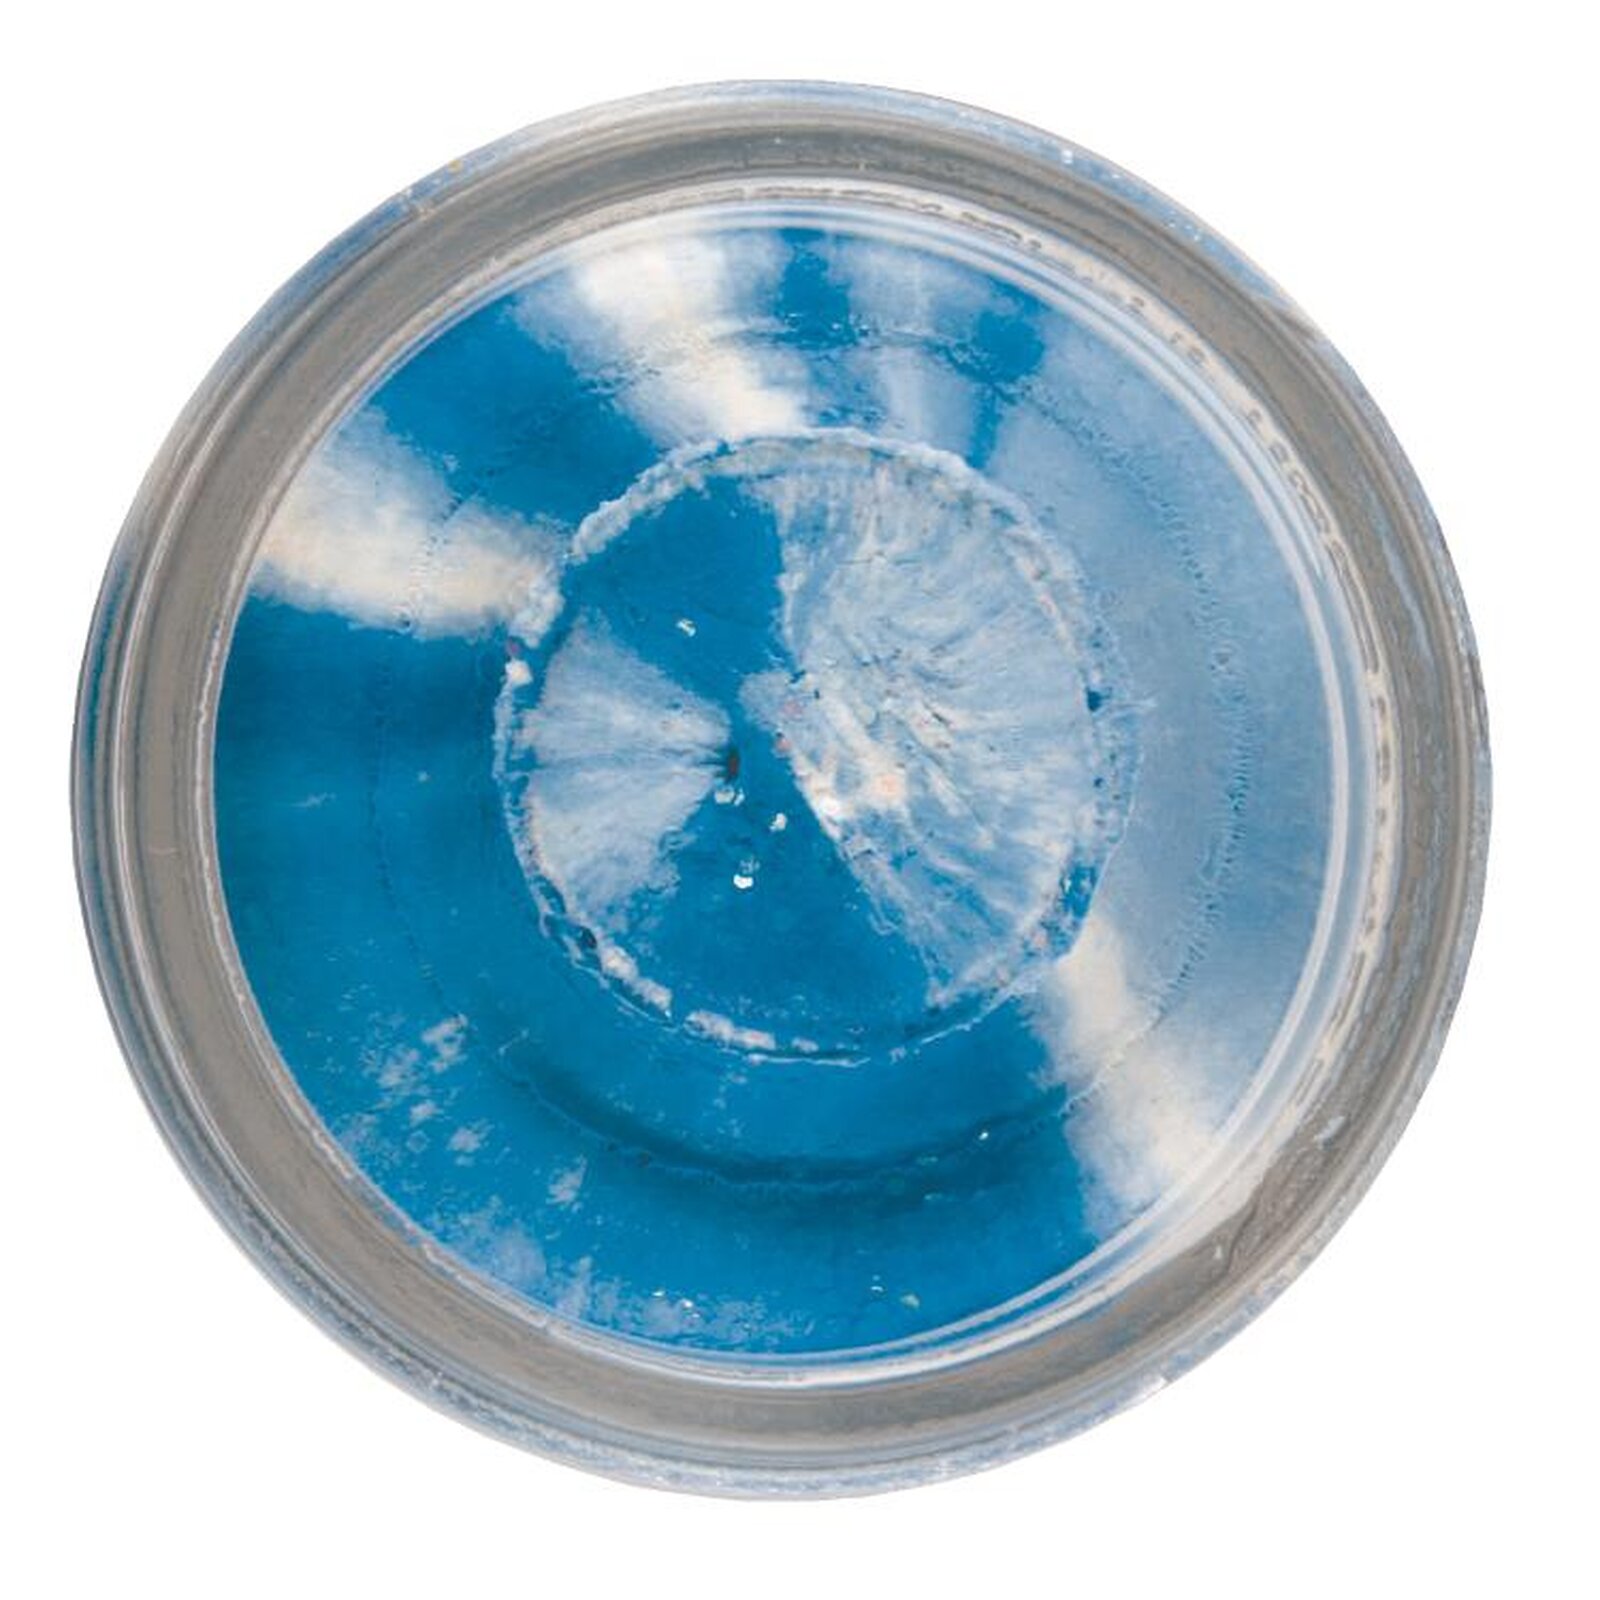 Berkley Trout Bait Glitter white/neon blue - 50g